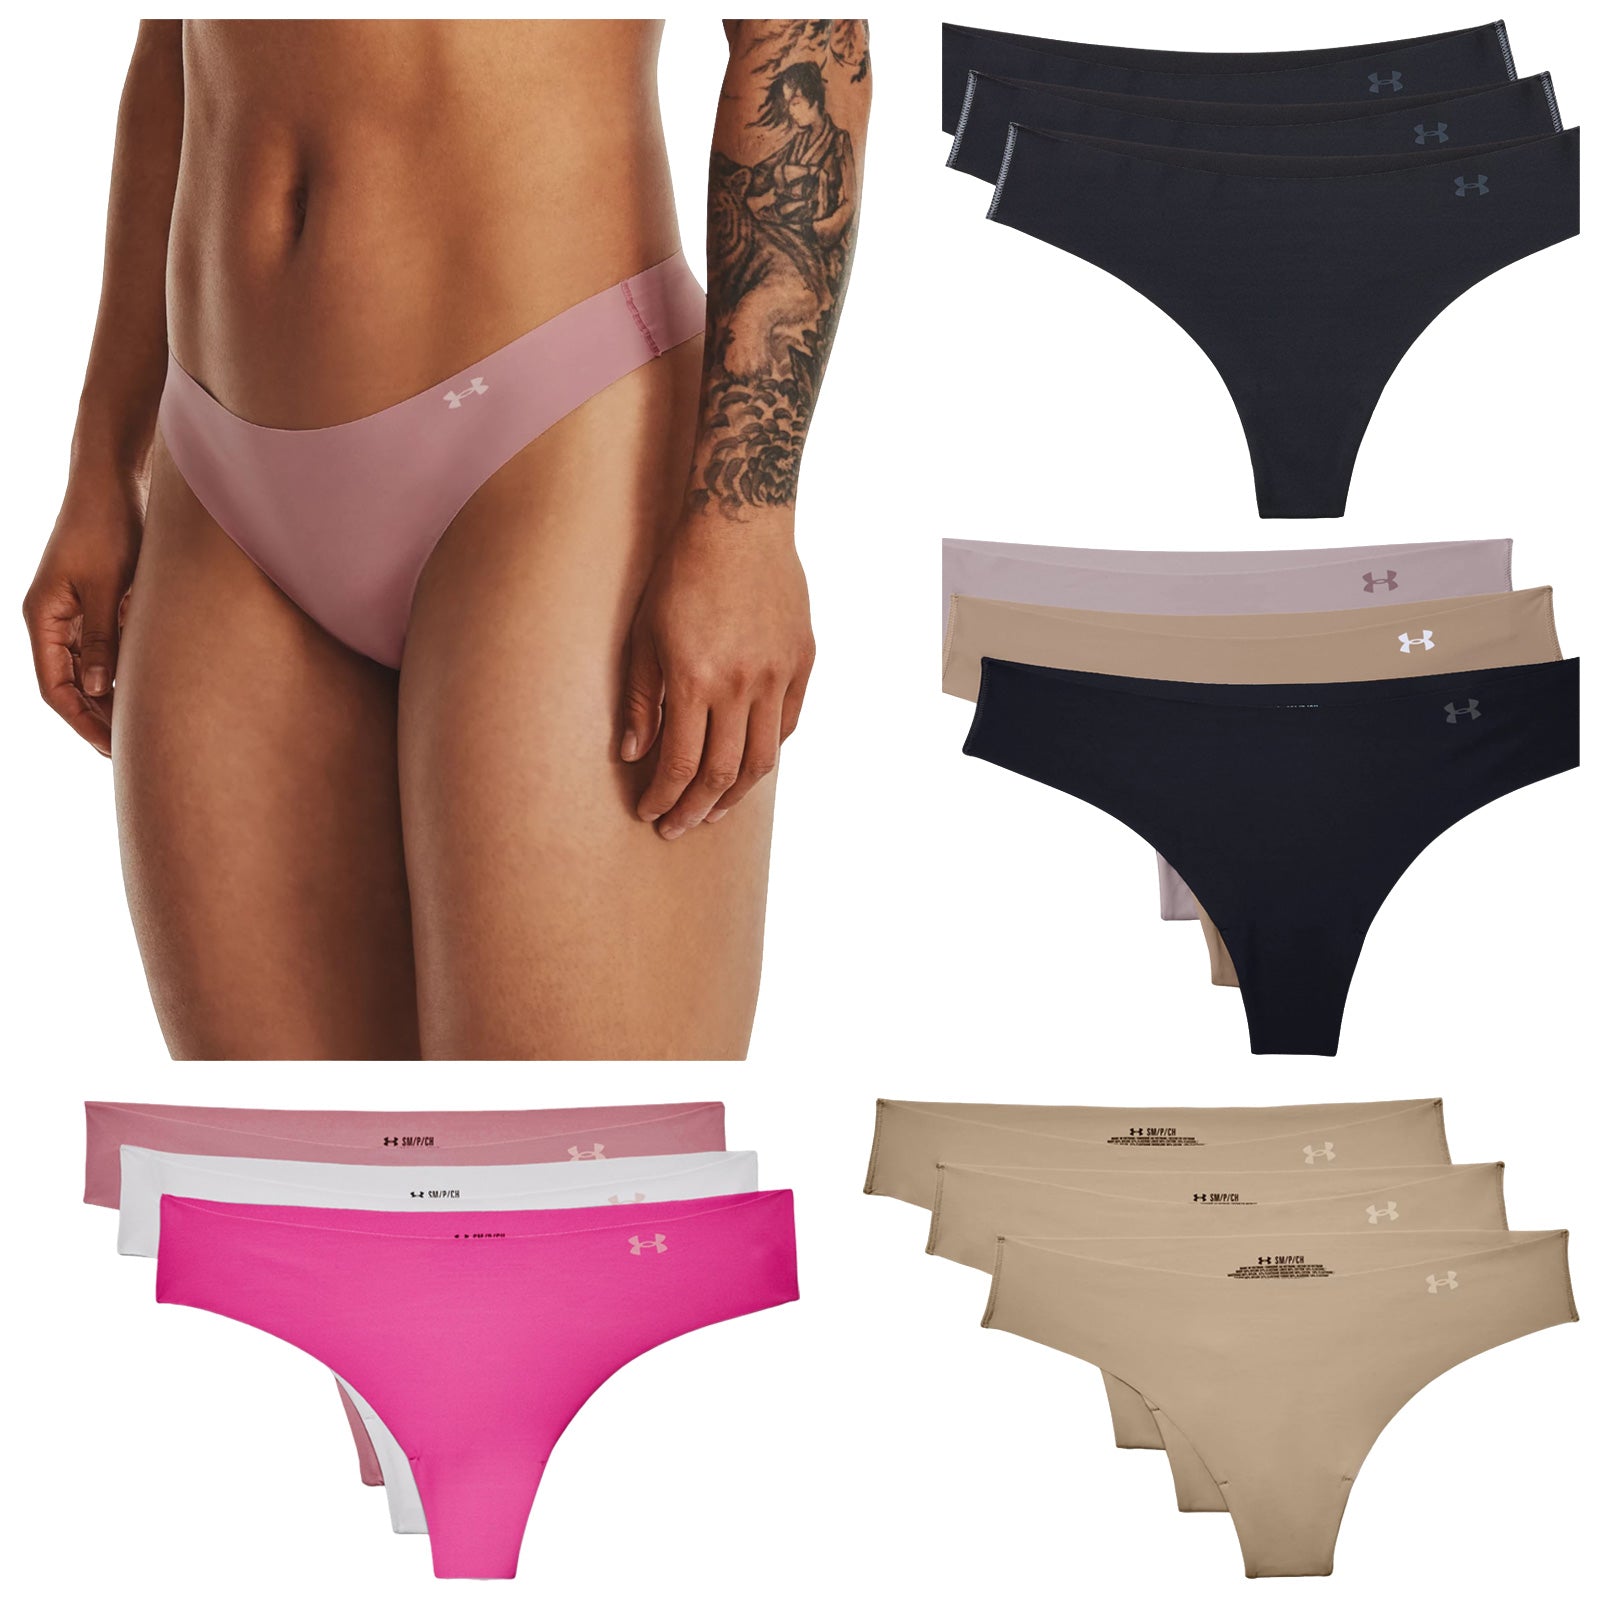  Under Armour Womens Hipster 3-Pack Printed Underwear, Dash  Pink